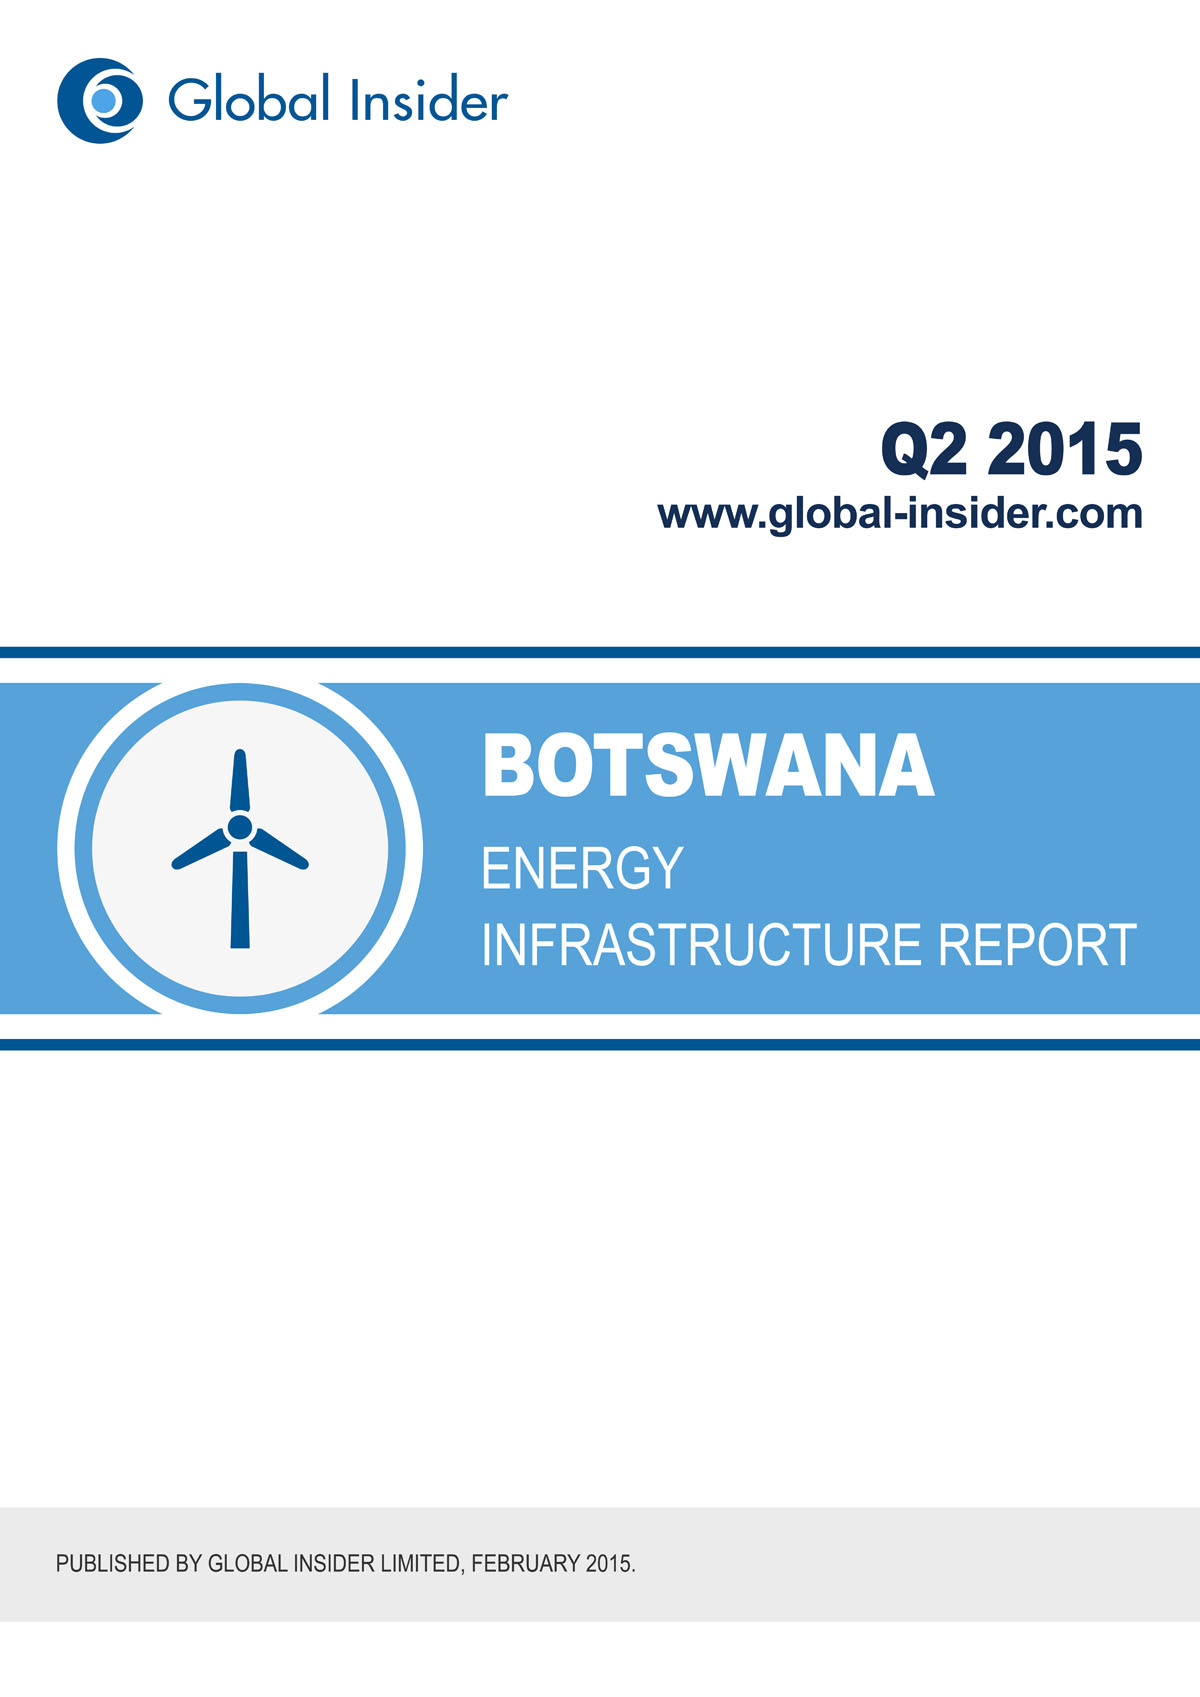 Botswana Energy Infrastructure Report